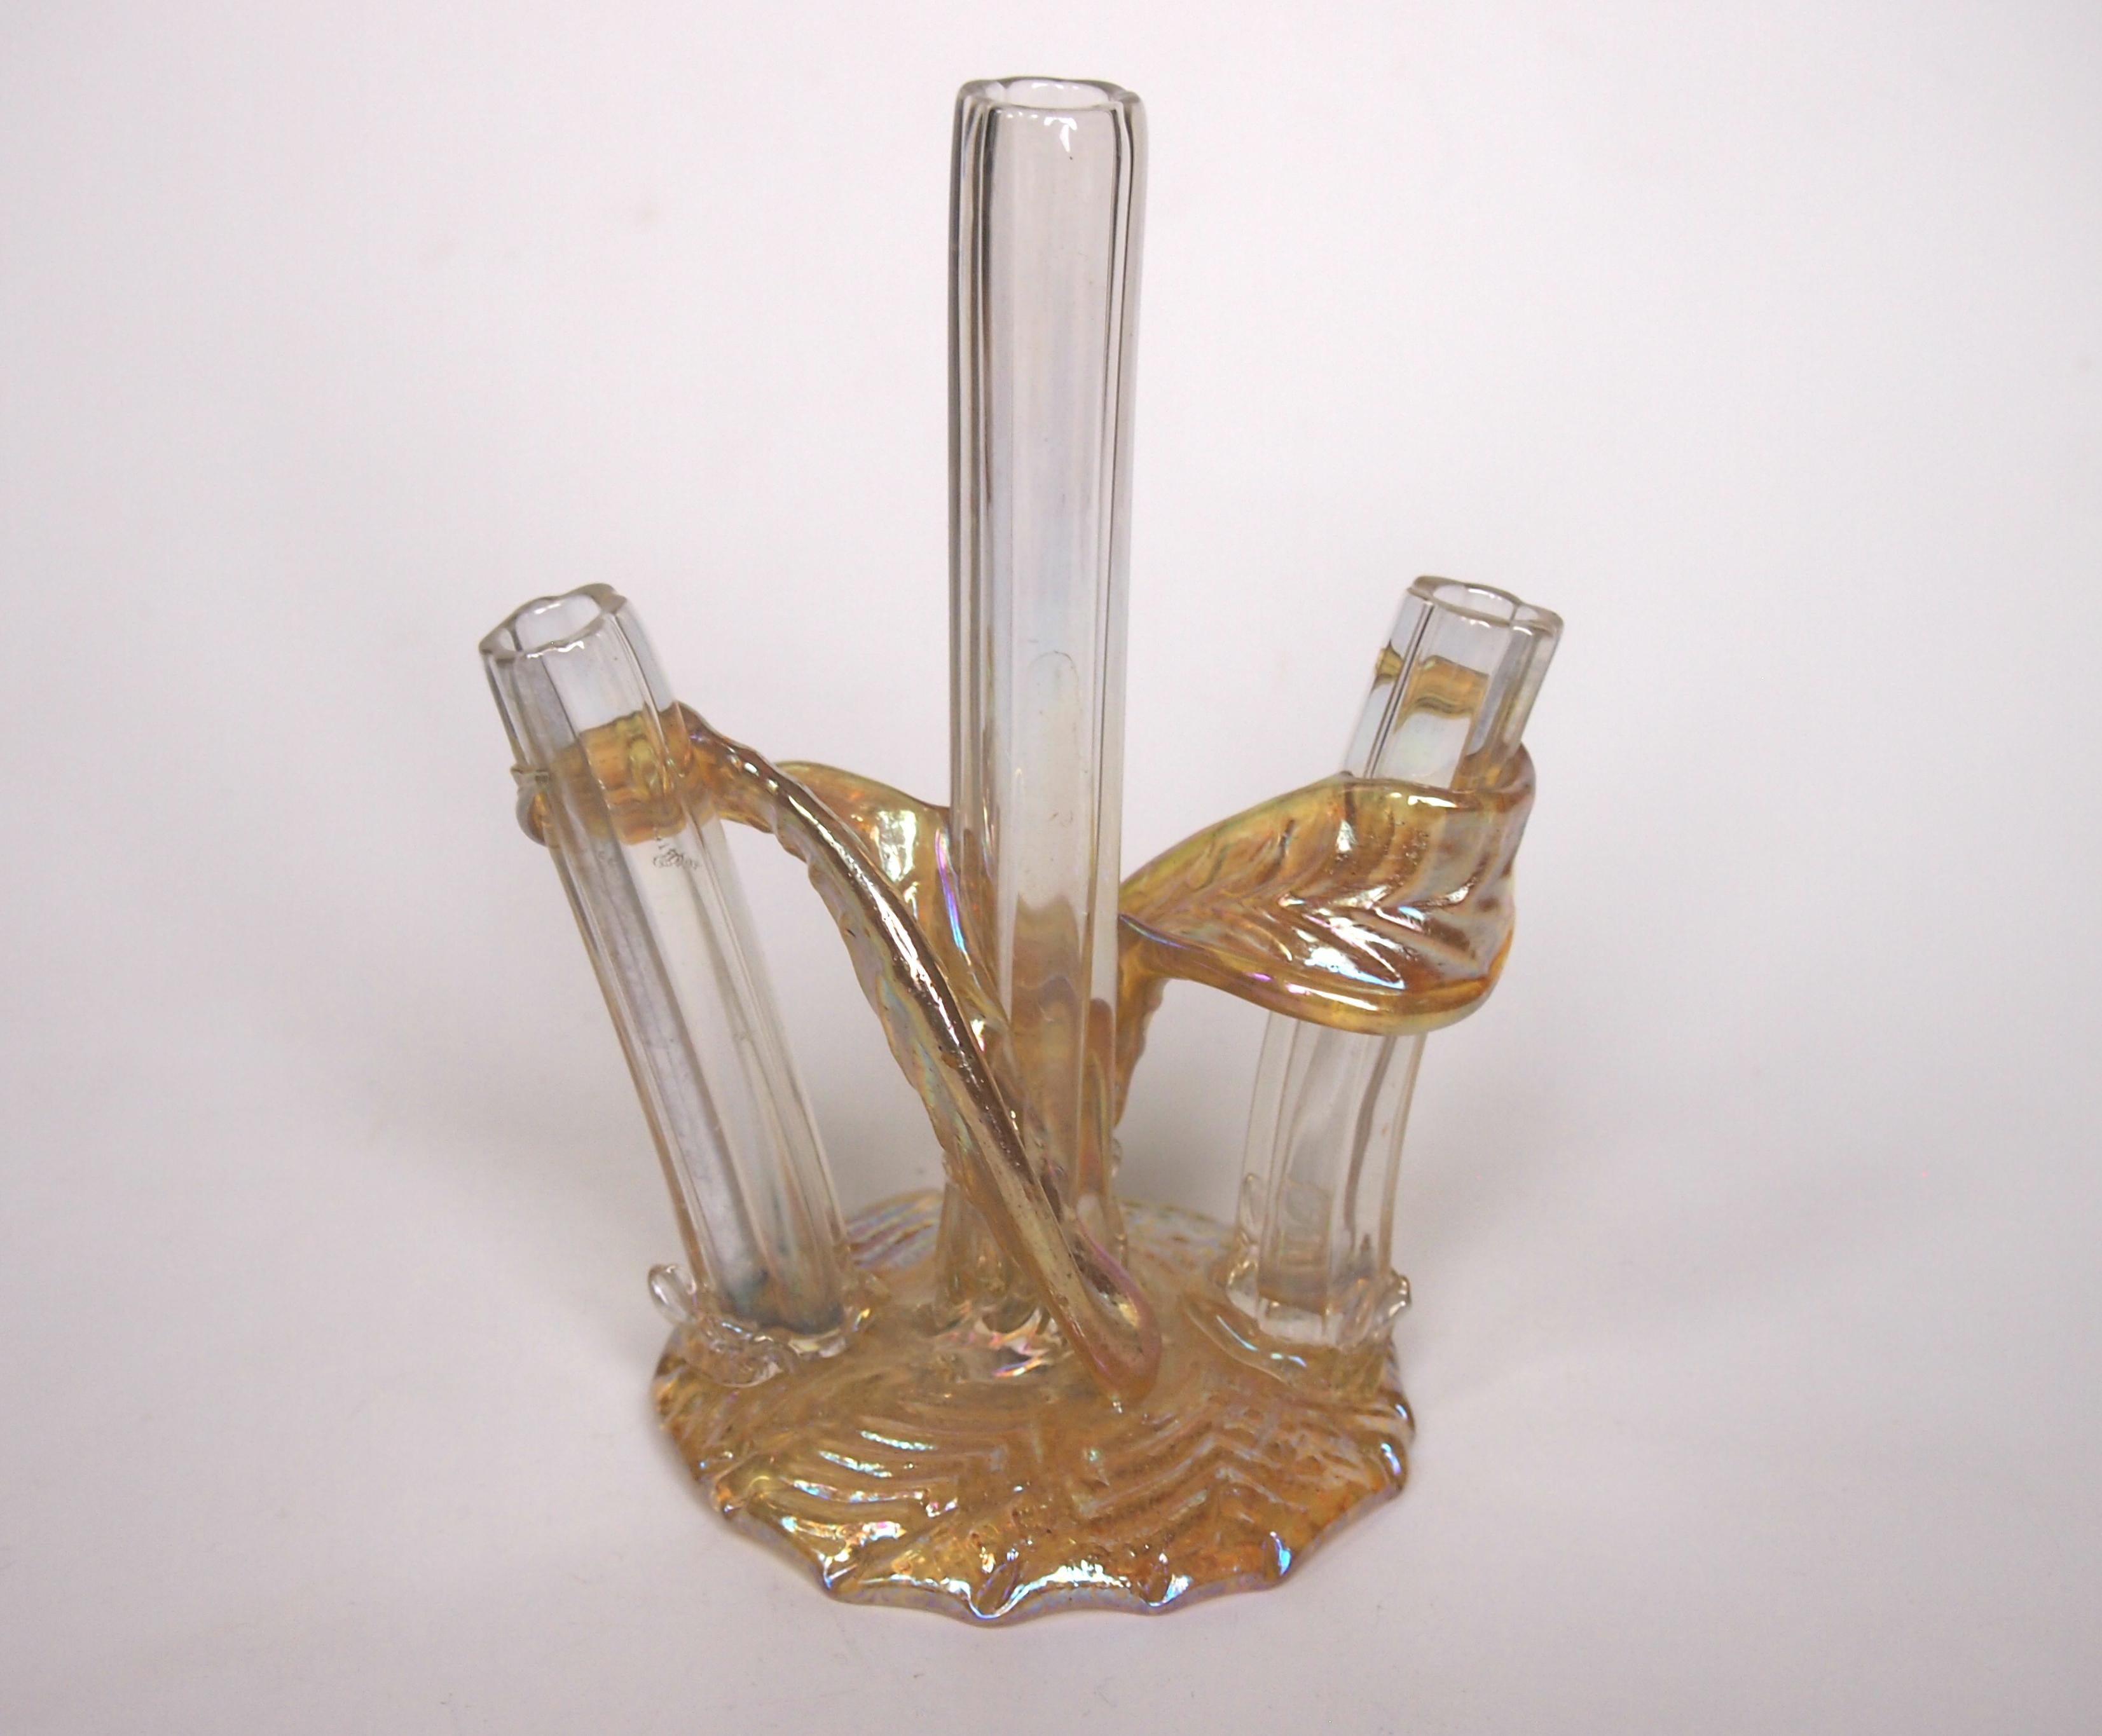 Czech Bohemian Art Nouveau Loetz Glass Stick Vase Made for Max Emanuel in 1910 For Sale